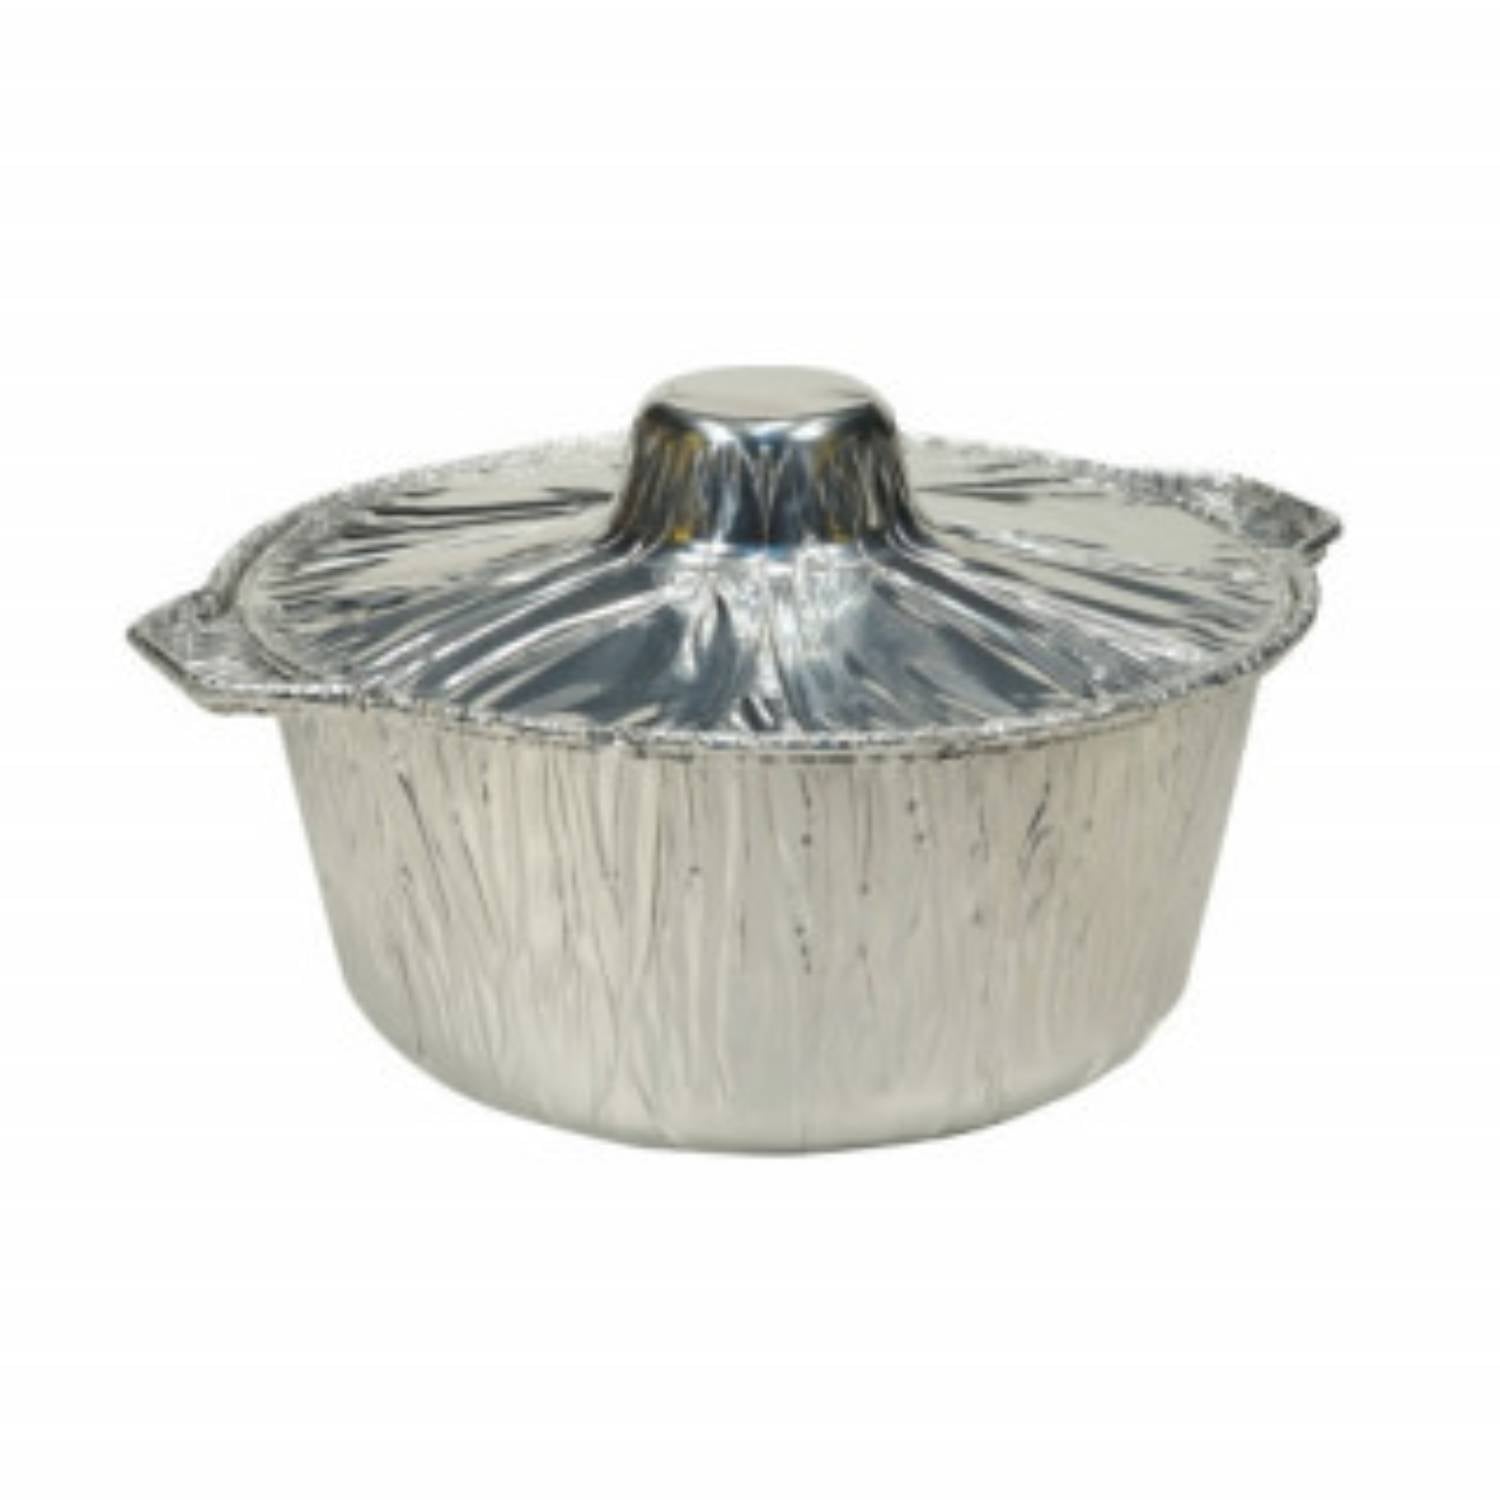  Propack Aluminum Disposable Pots With Lids large 5.5 Quarts  Pack of 3 Disposable Aluminum pots: Home & Kitchen